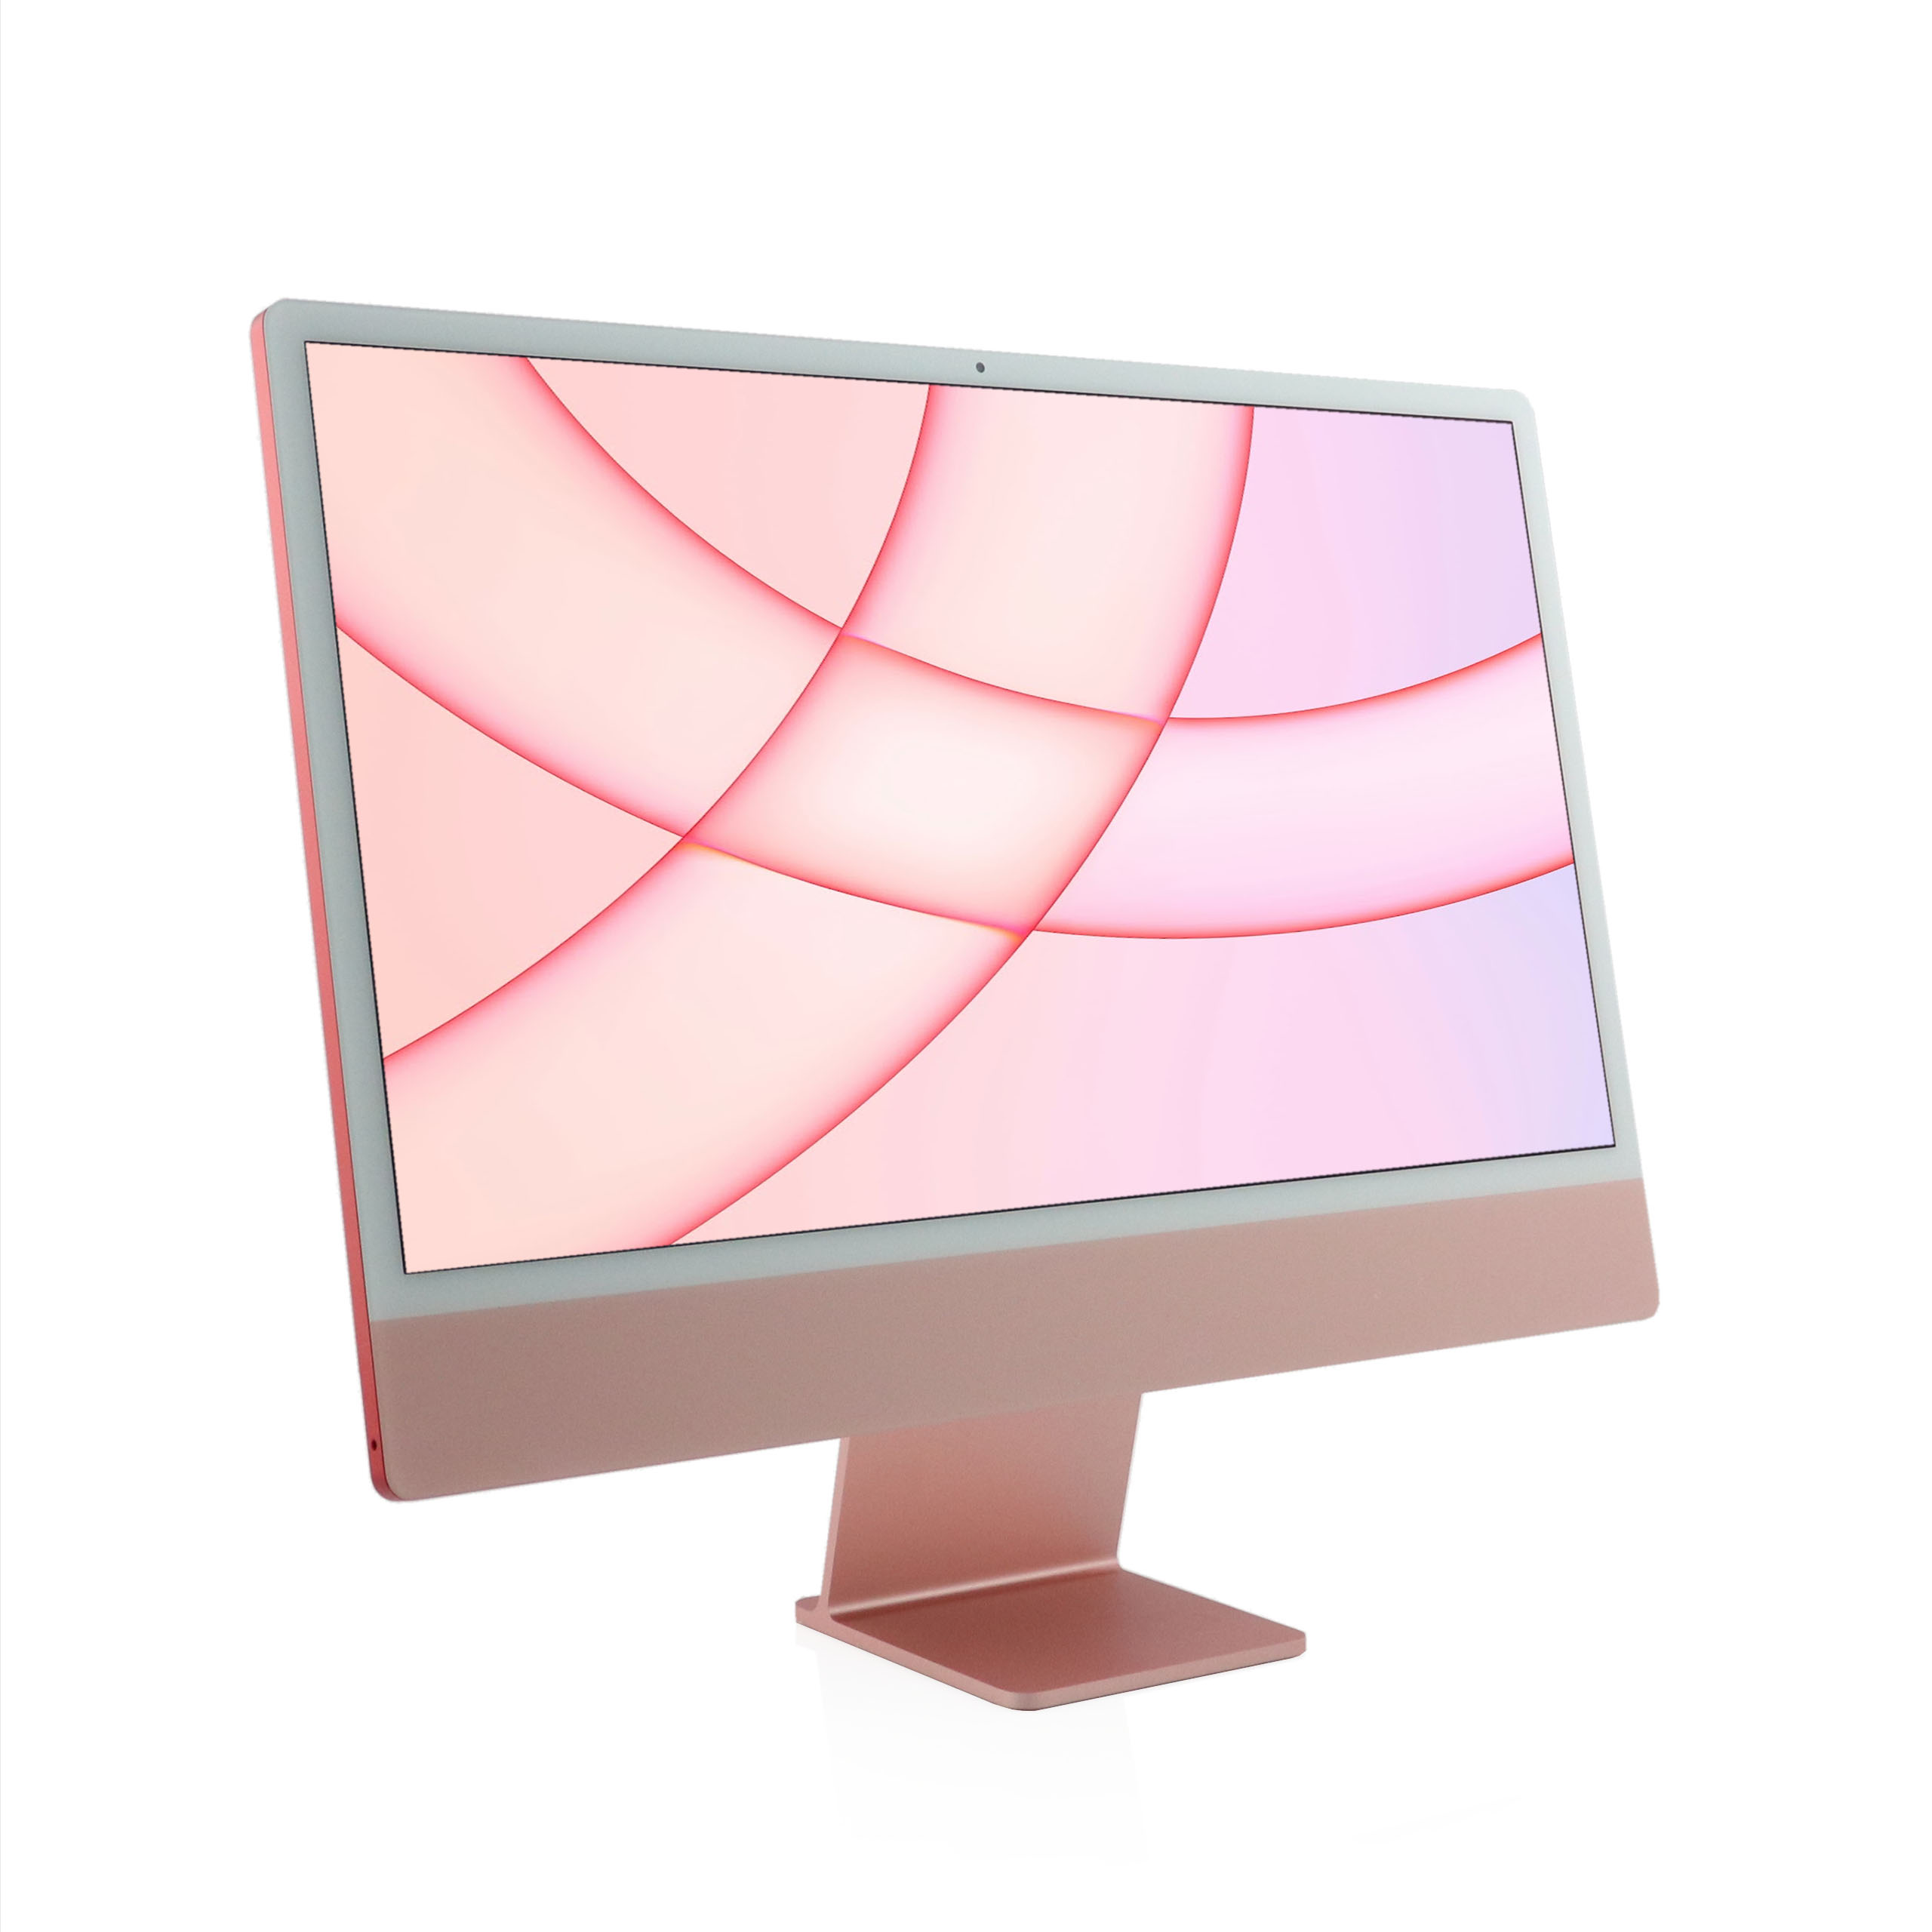 2021 Apple iMac 4.5K 24-inch M1 8GB 256GB - Pink - 